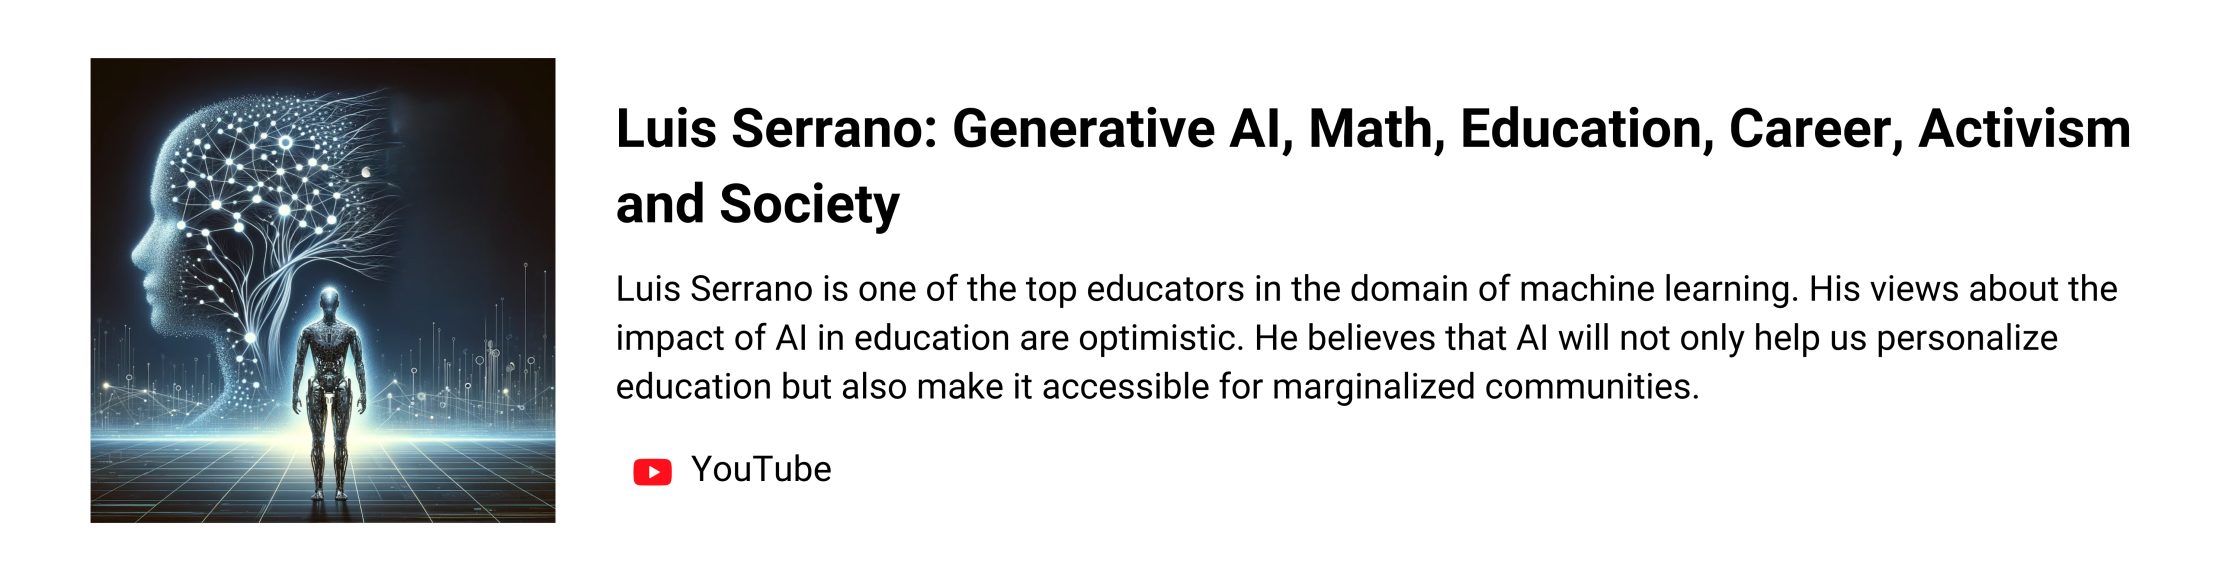 Popular AI Scientist Luis Serrano on Generative AI in Education, Math, Career, Society